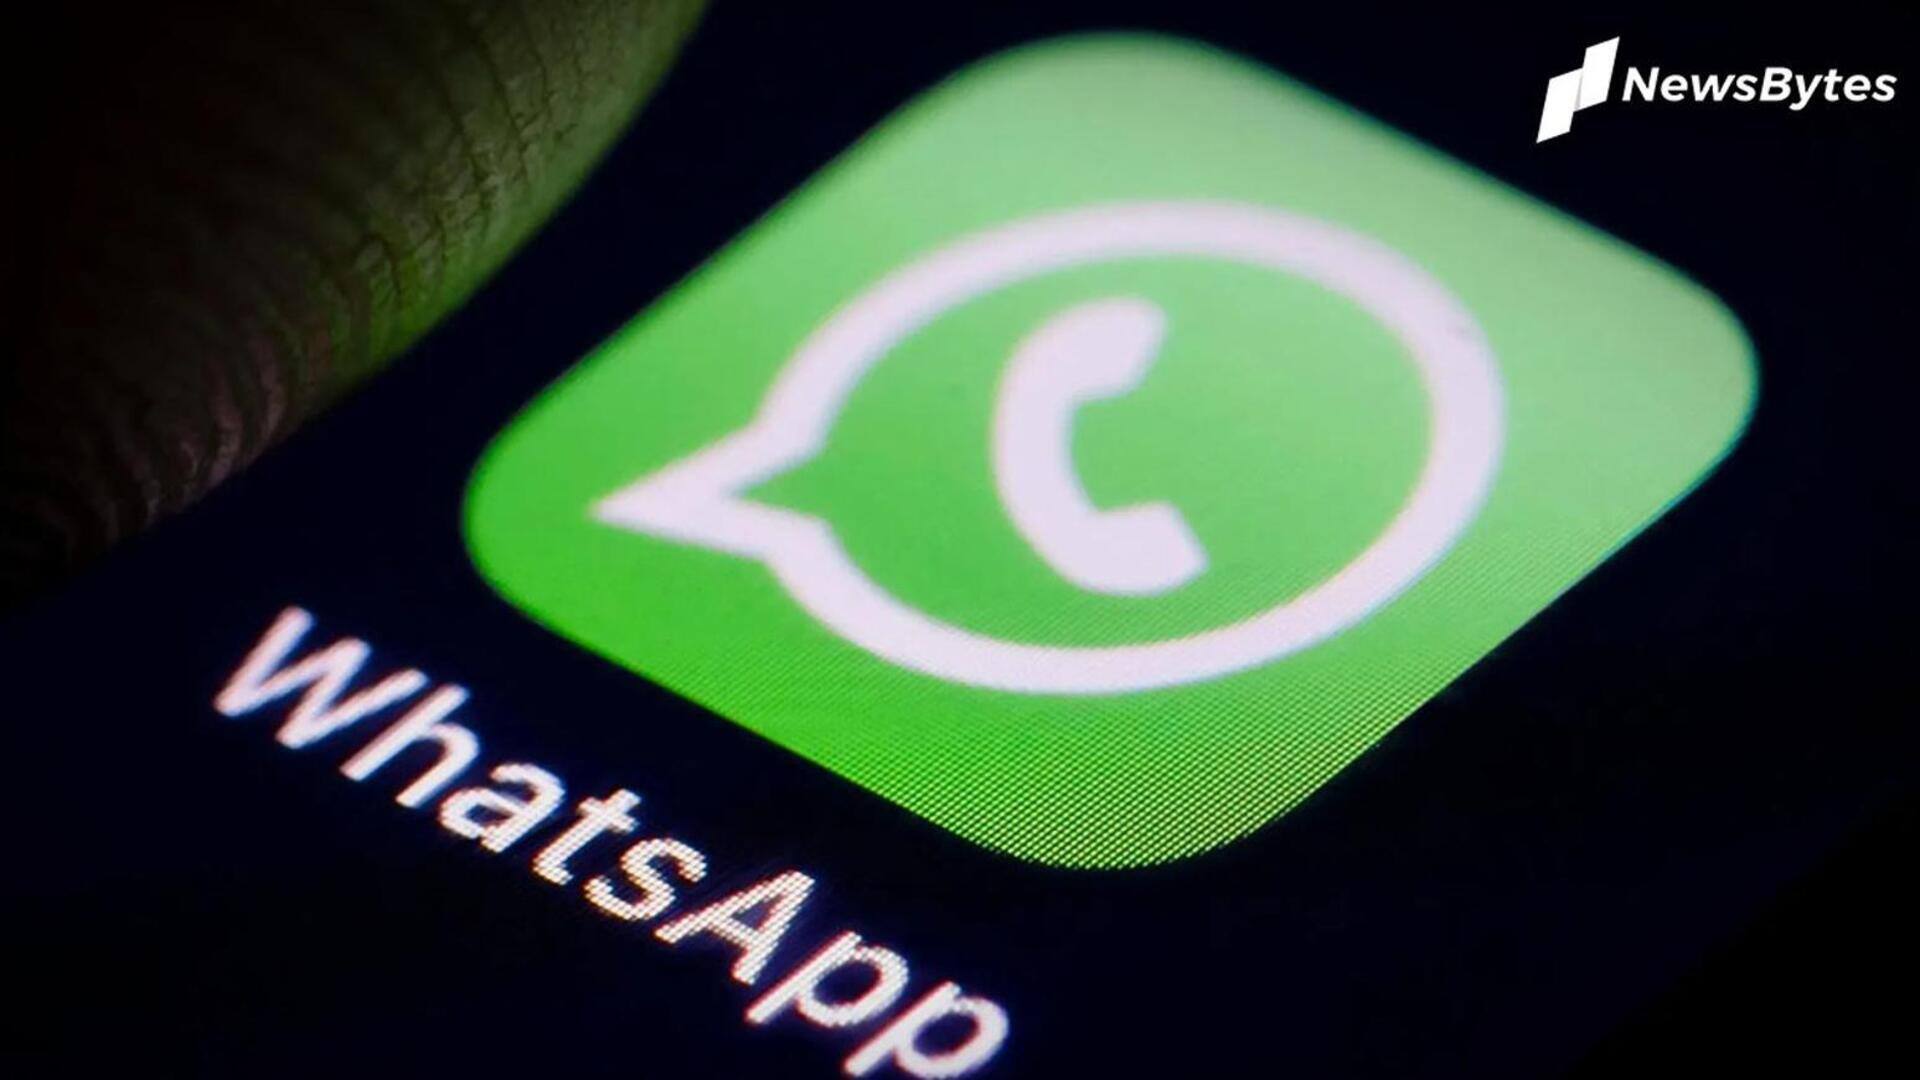 व्हाट्सऐप डाउन, यूजर्स को वीडियो डाउनलोड करने में हो रही समस्या 